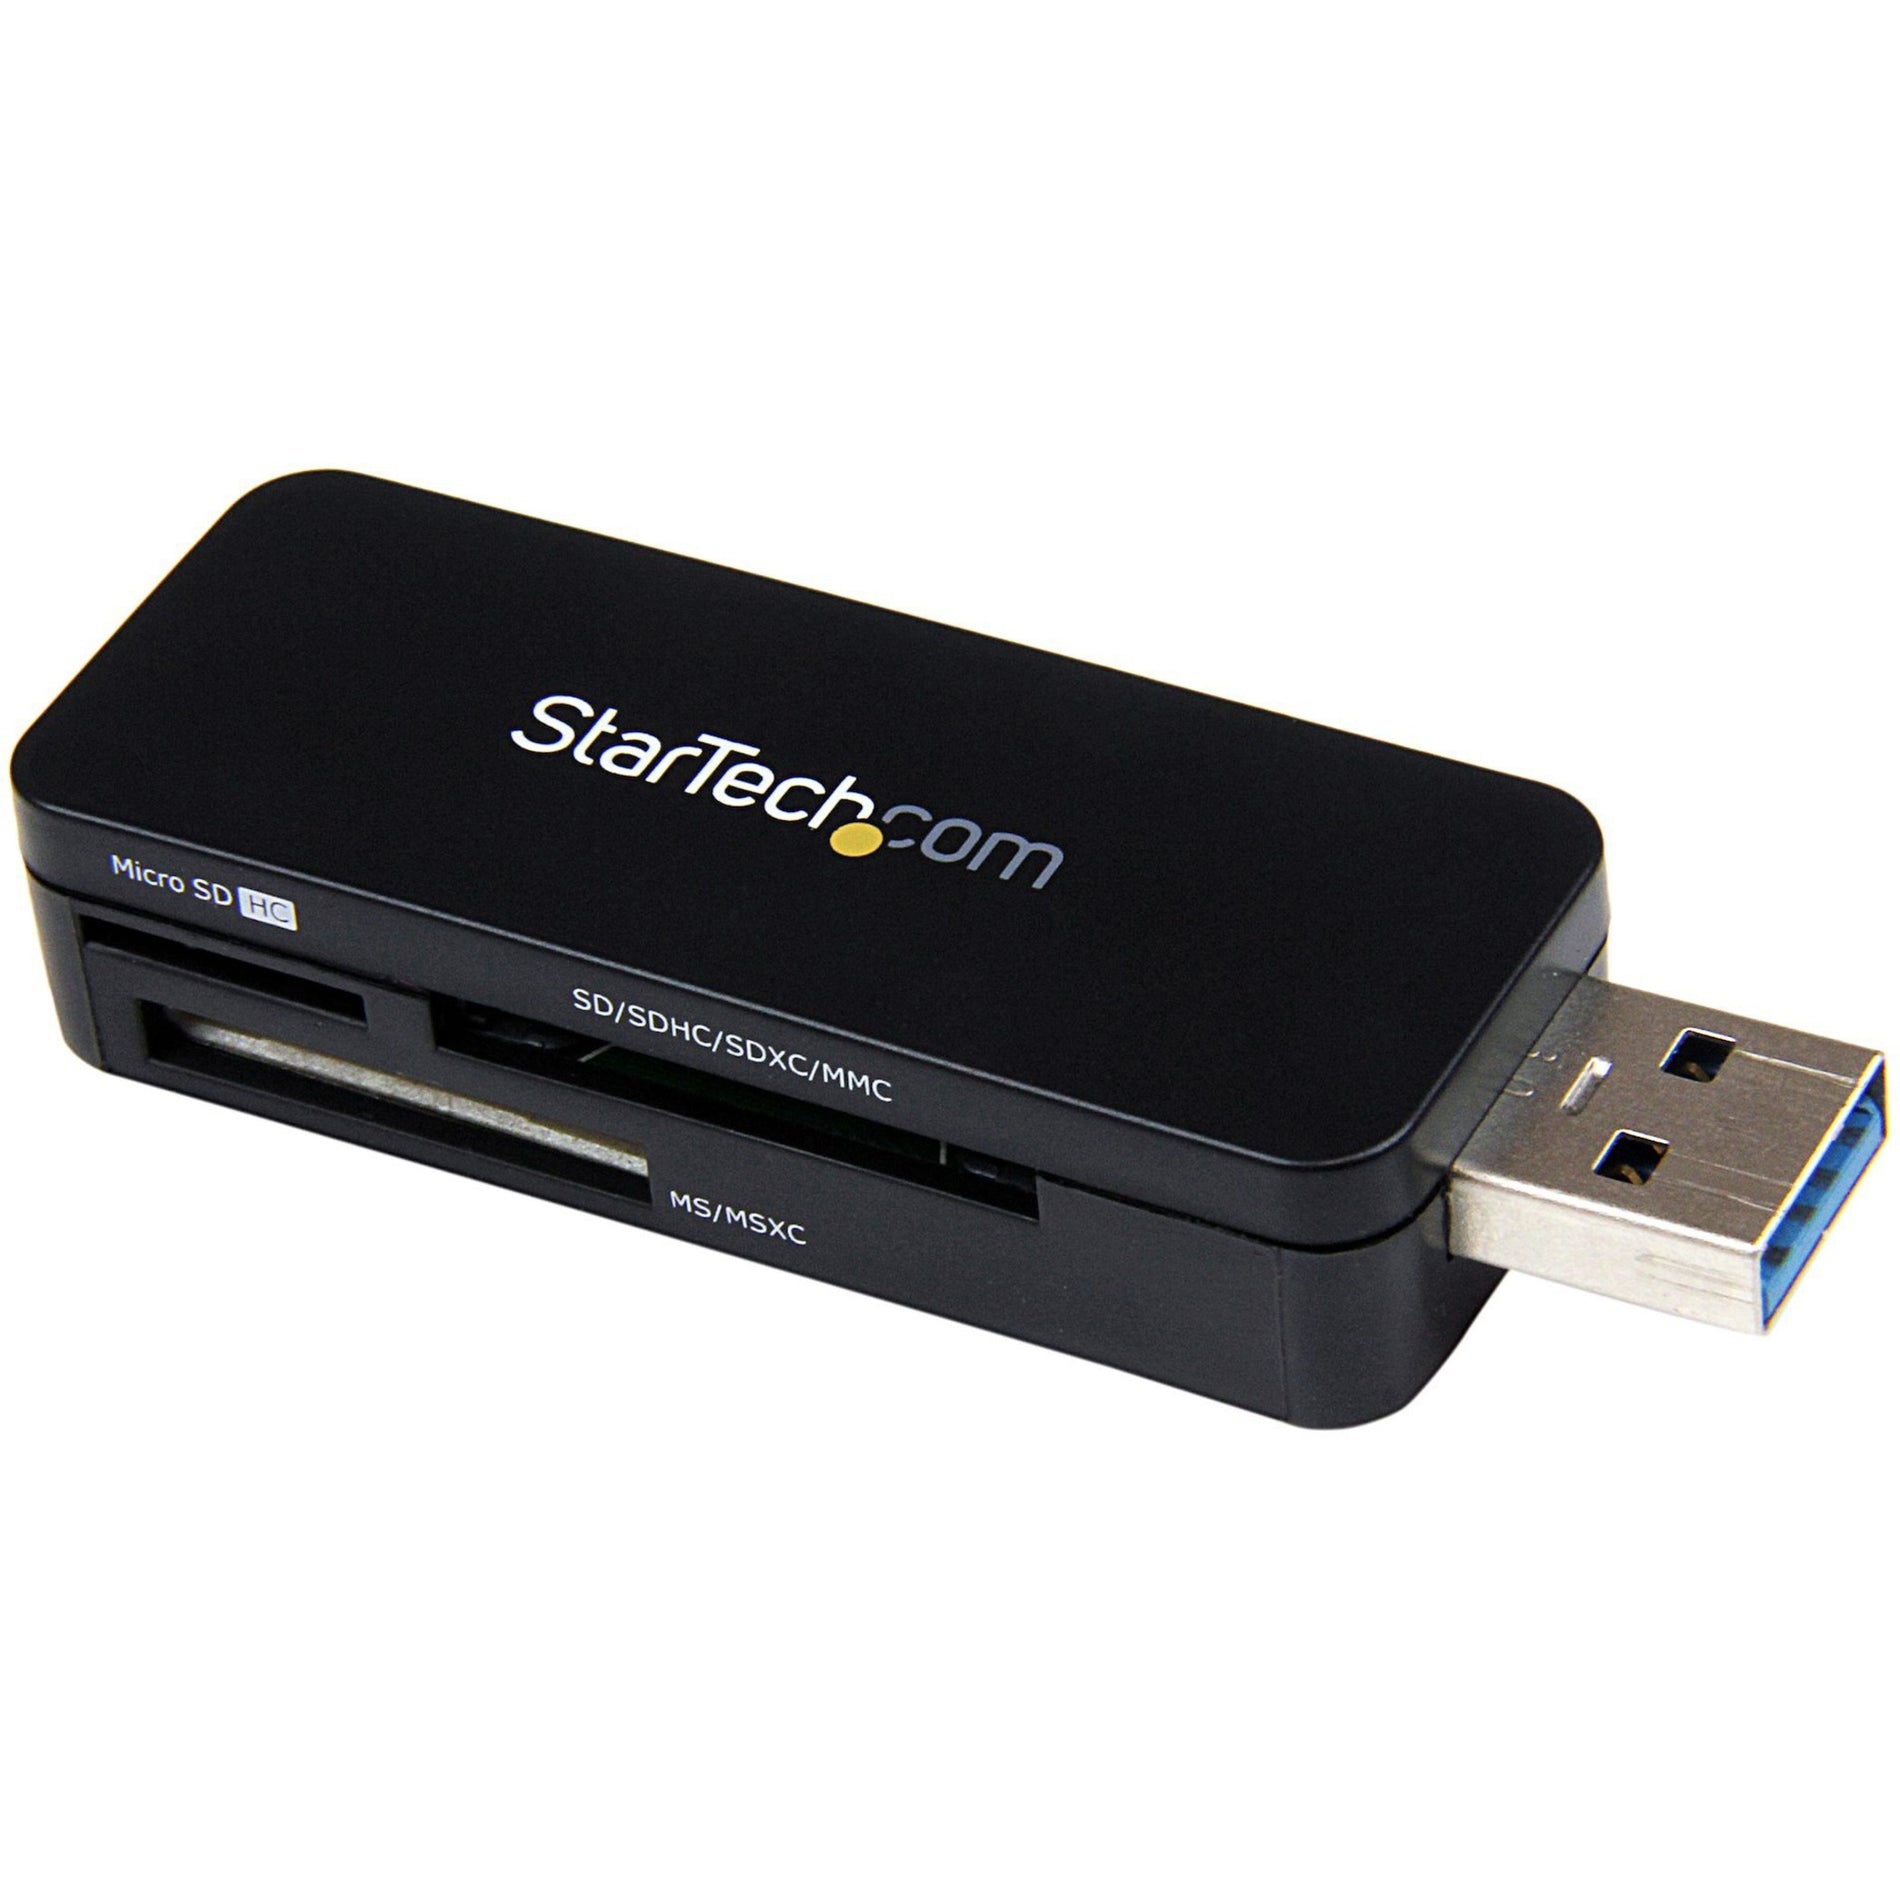 StarTech.com FCREADMICRO3 USB 3.0 External Flash Multi Media Memory Card Reader - SDHC MicroSD, High-Speed Data Transfer and Easy File Management